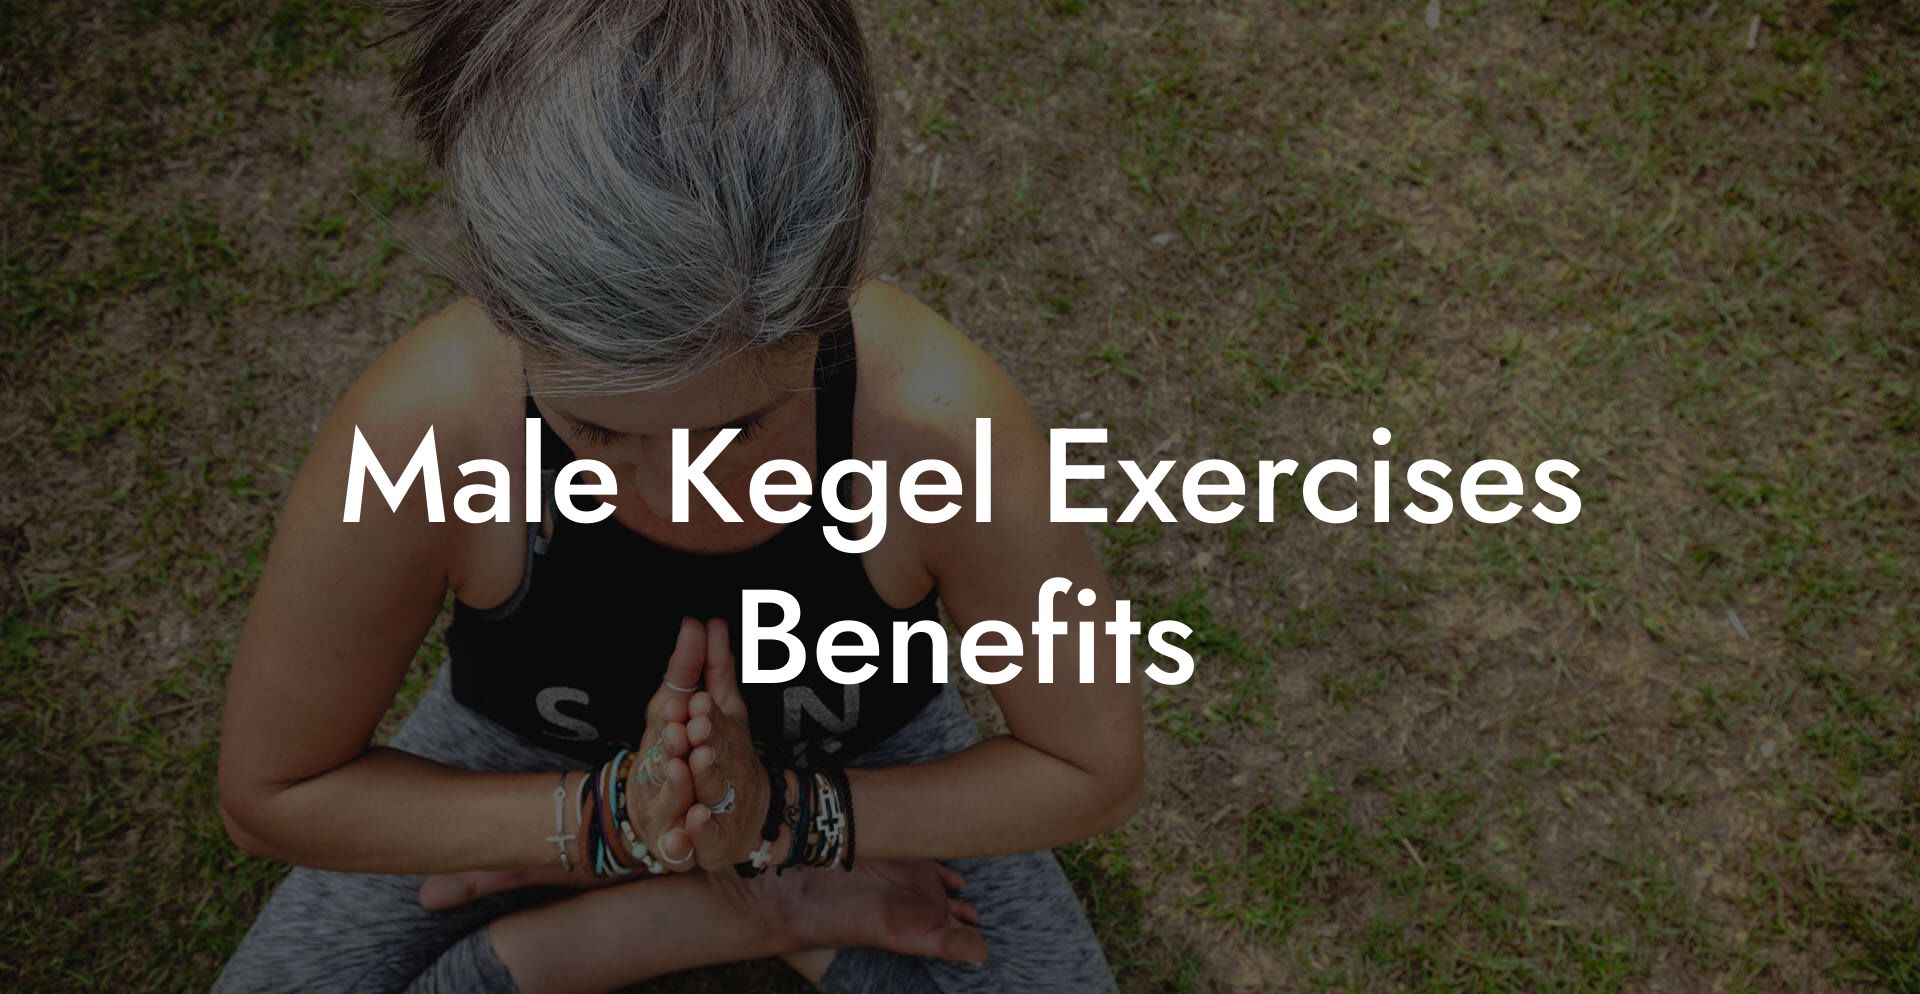 Male Kegel Exercises Benefits